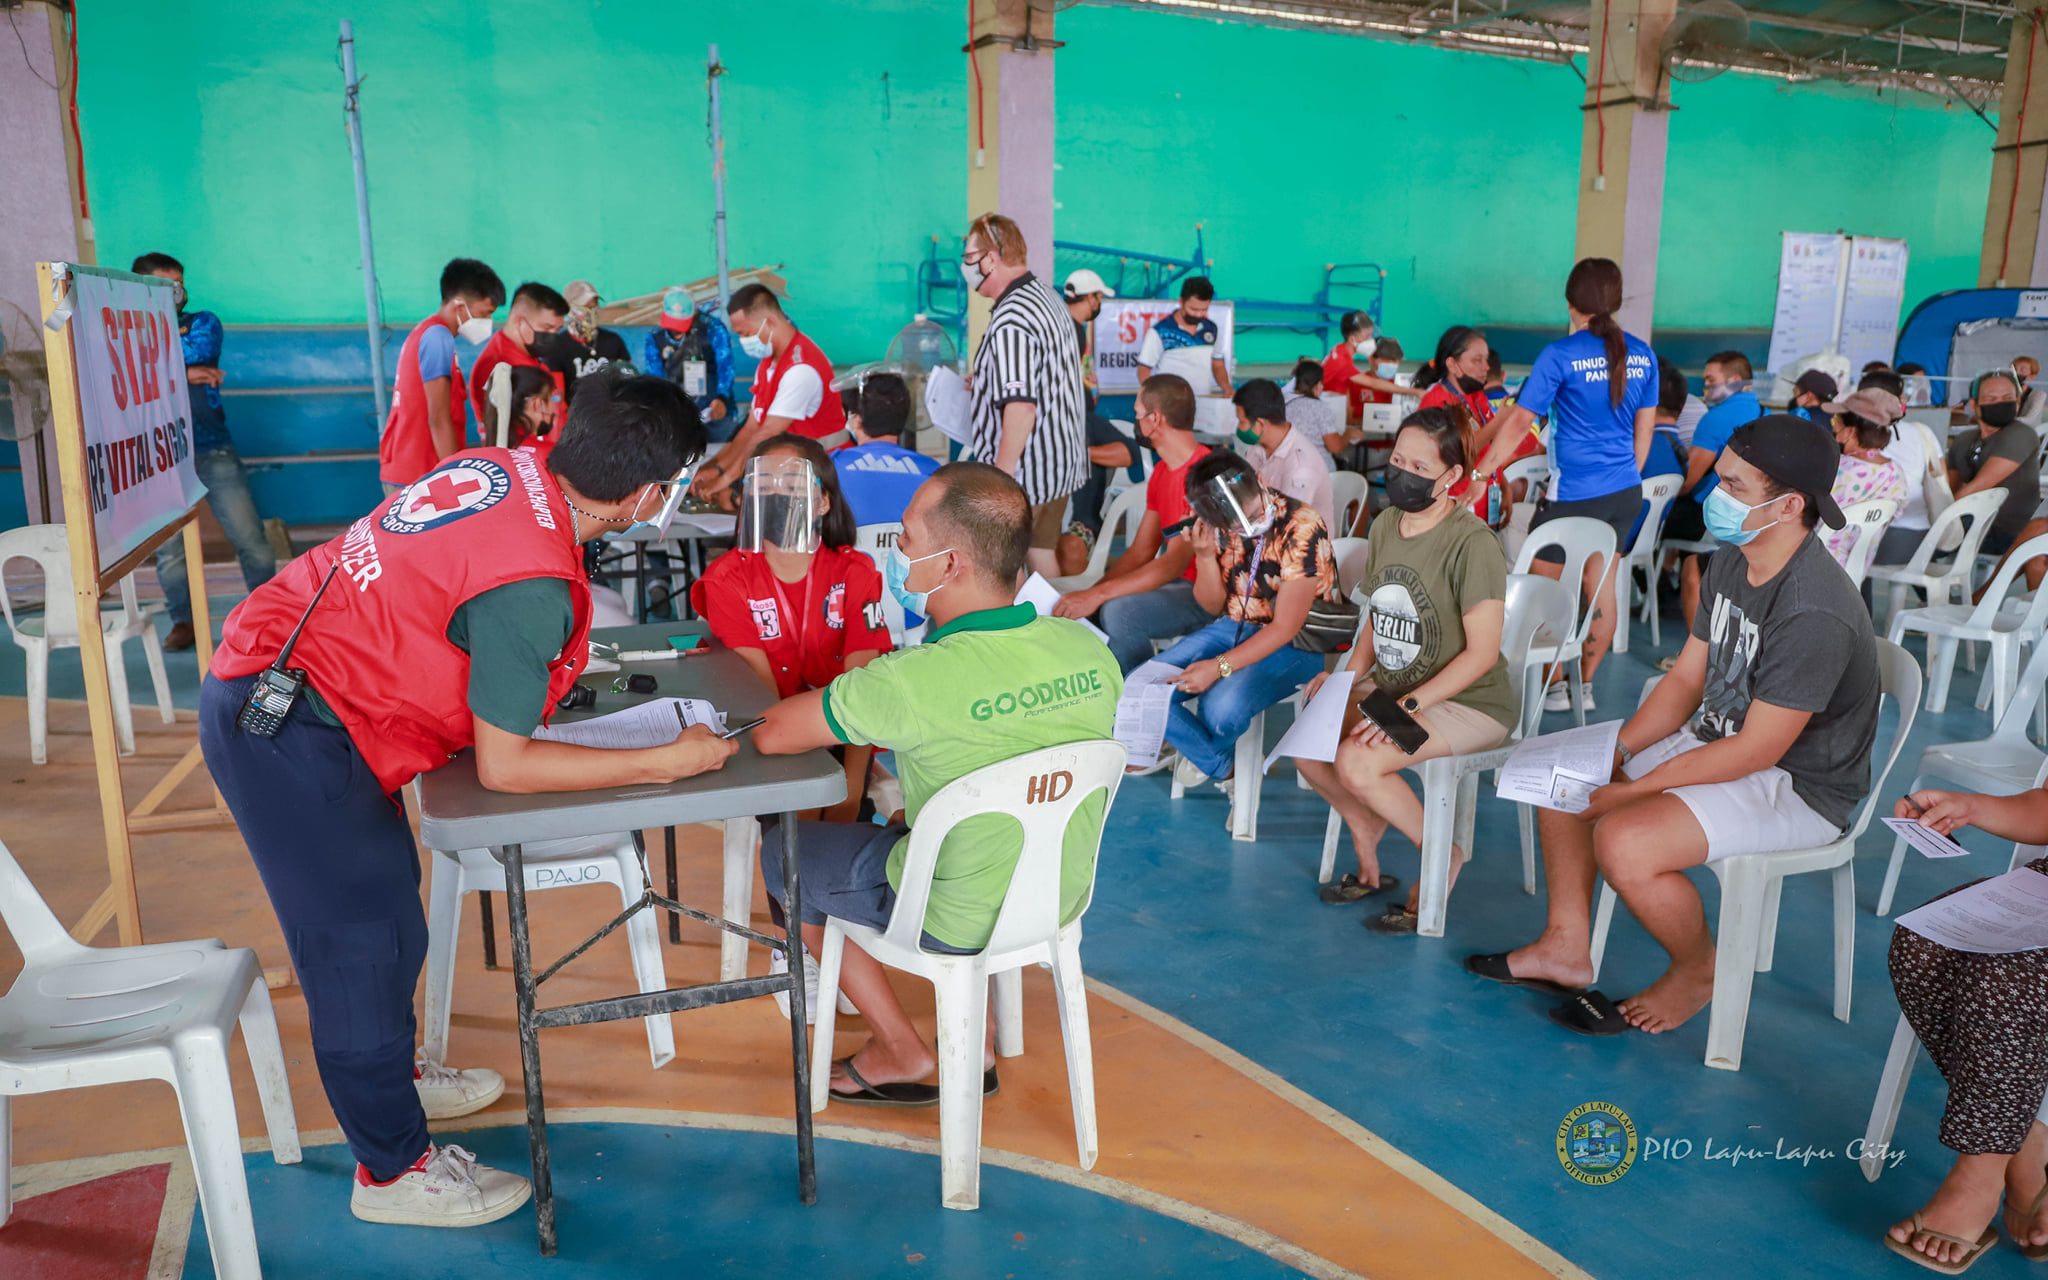 58 kids in Lapu-Lapu, Cebu City shelters test positive for COVID-19